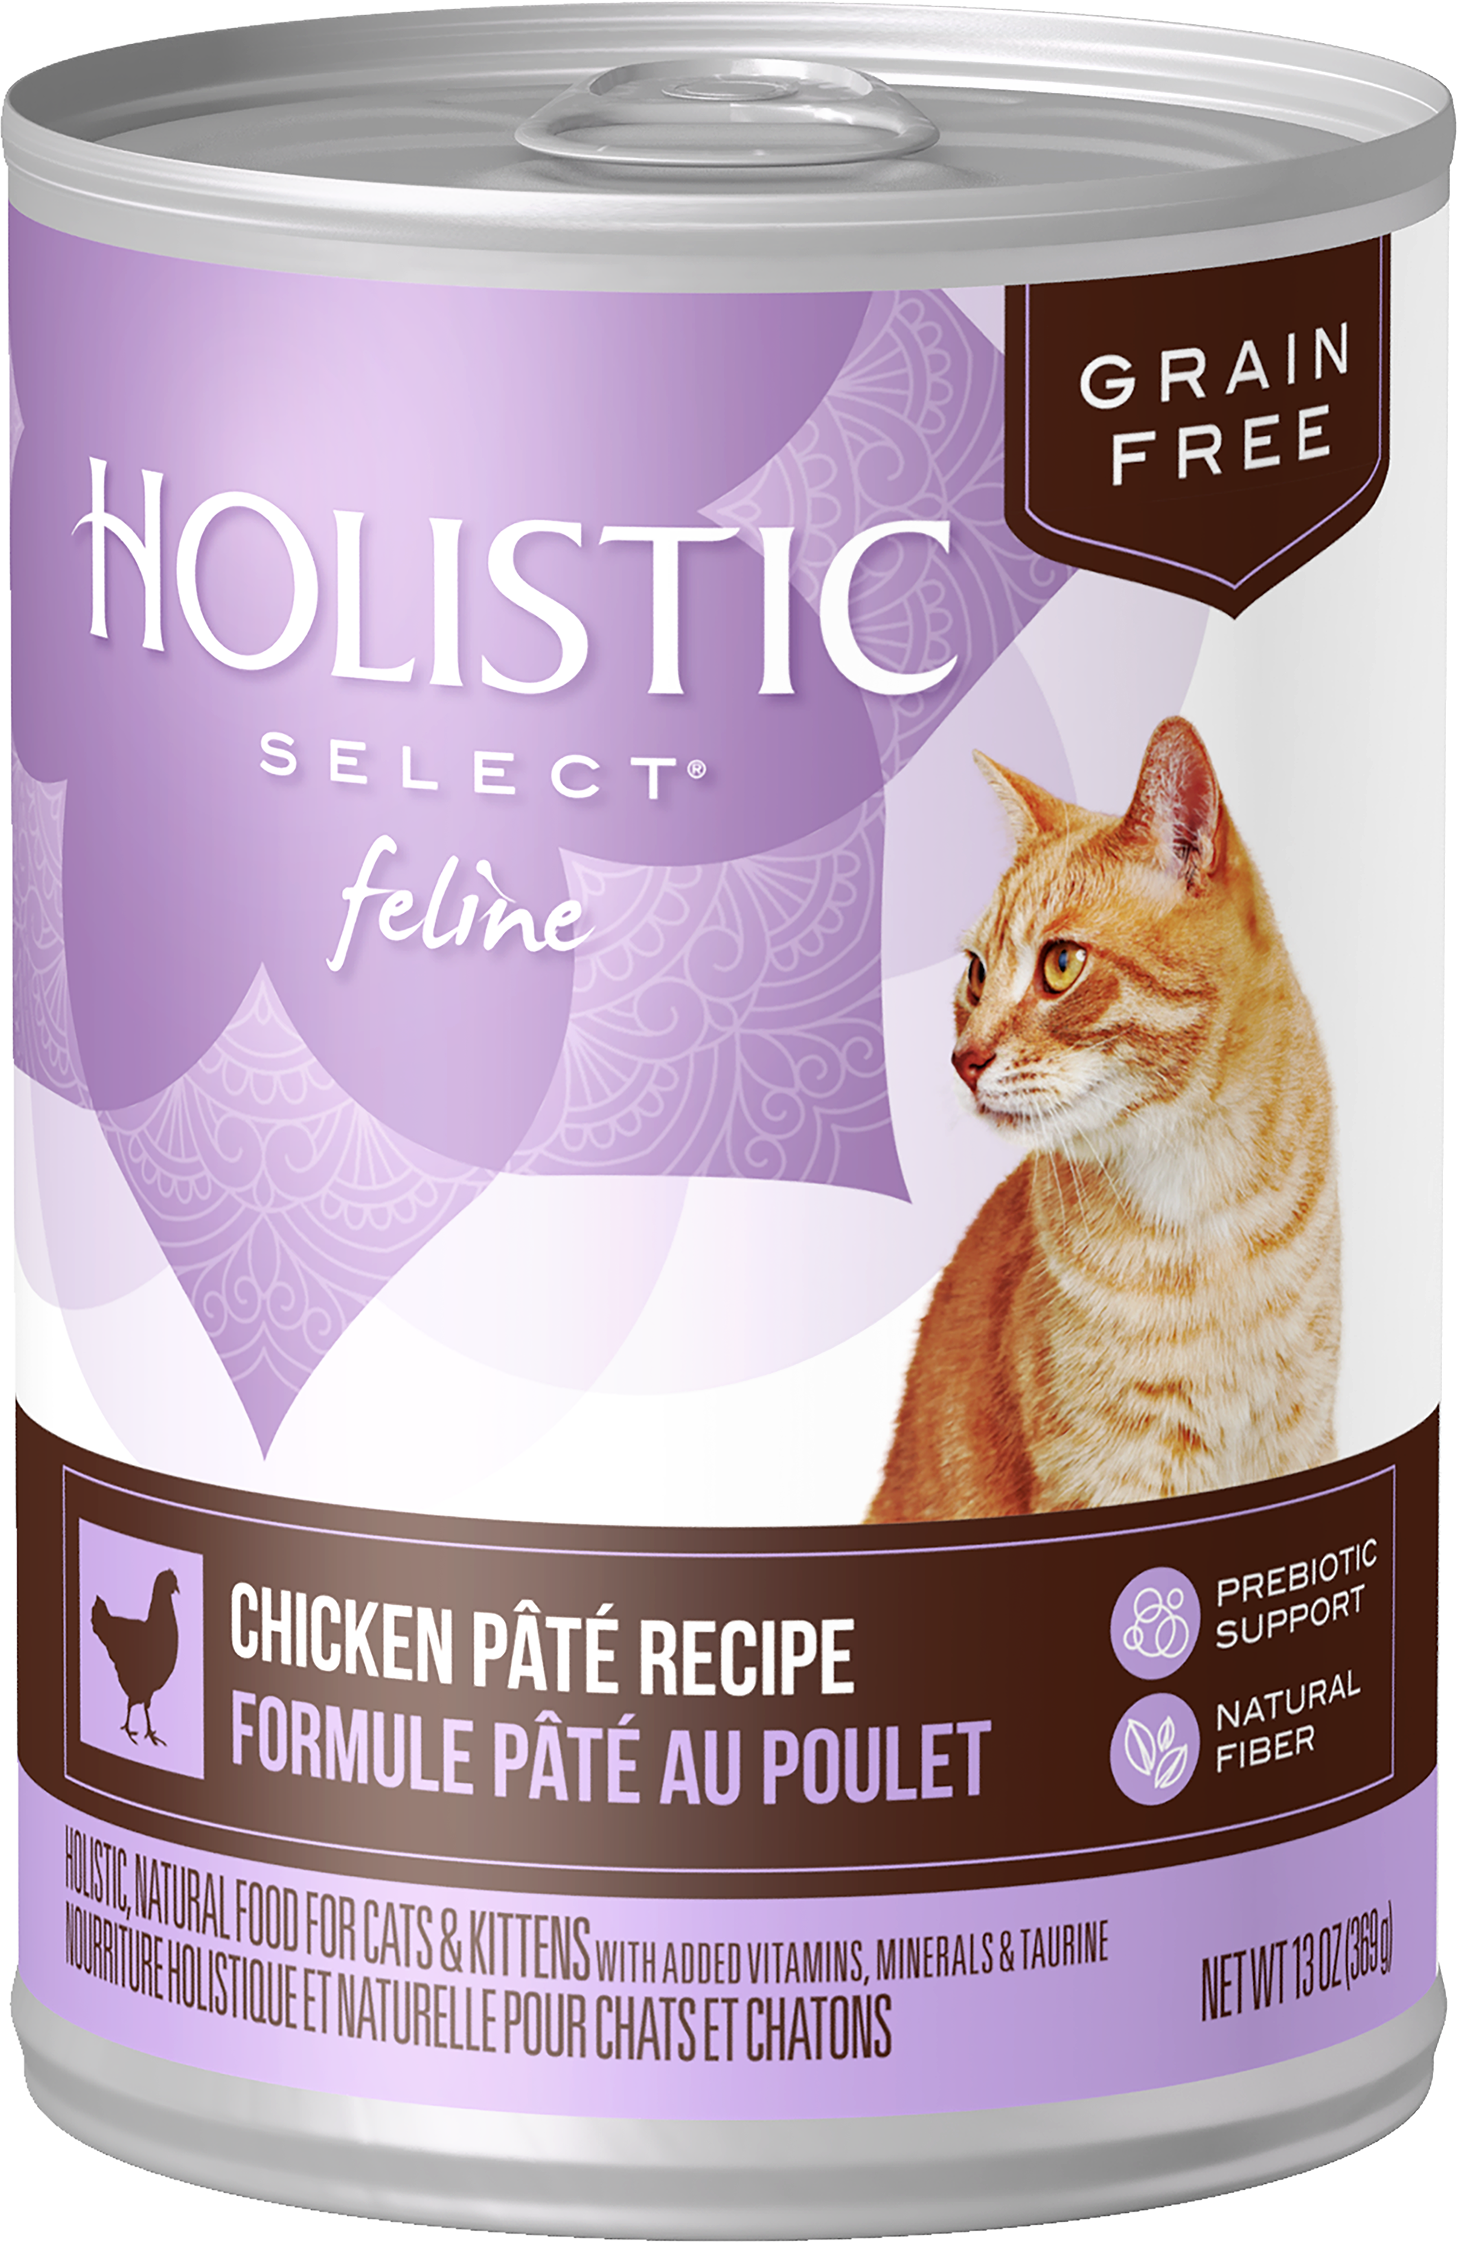 Grain Free Chicken Pâté Recipe product packaging image 1